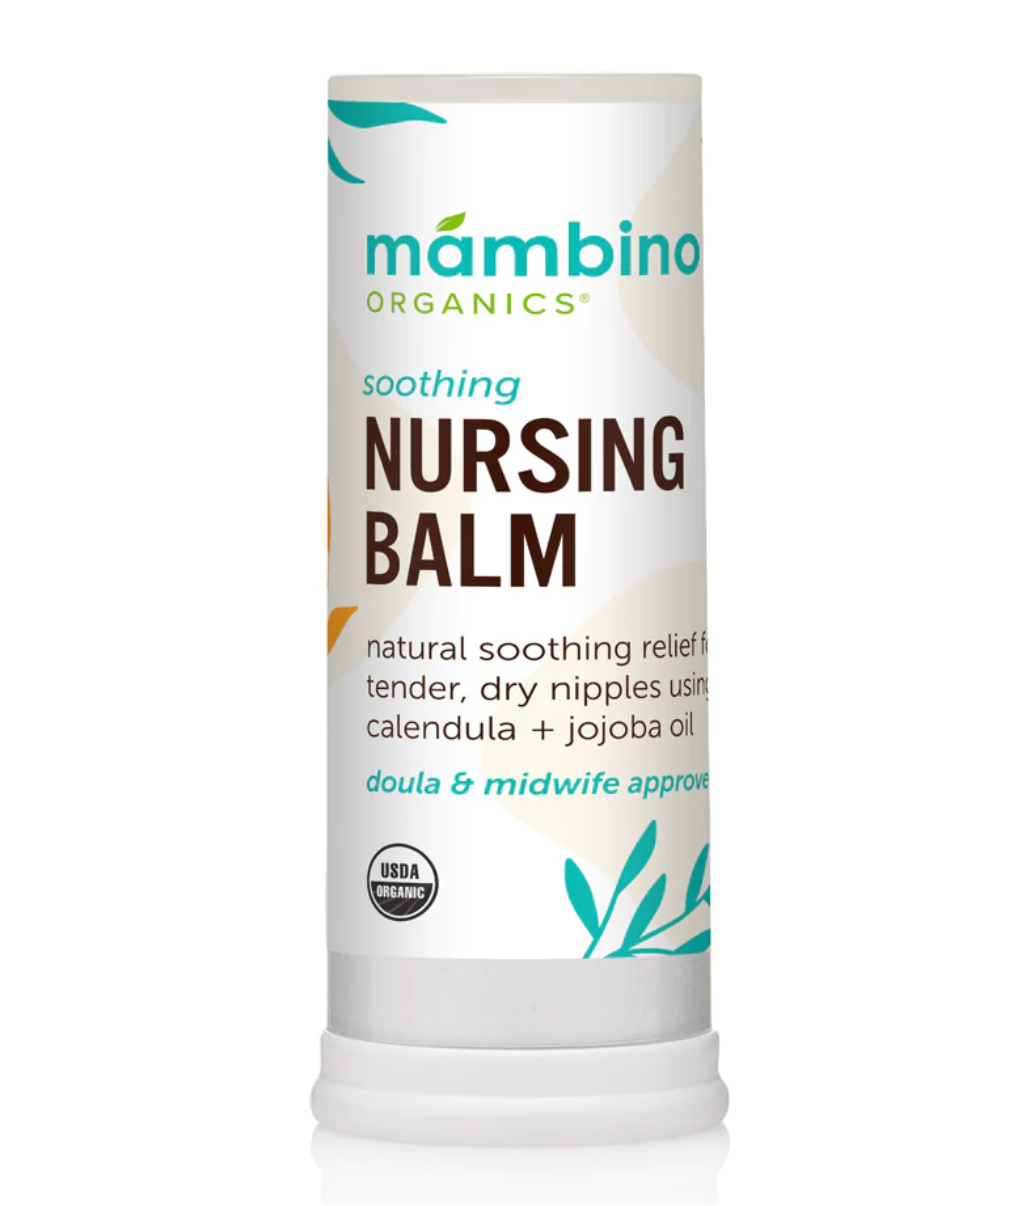 Mambino Calendula Nursing Balm review and promo code